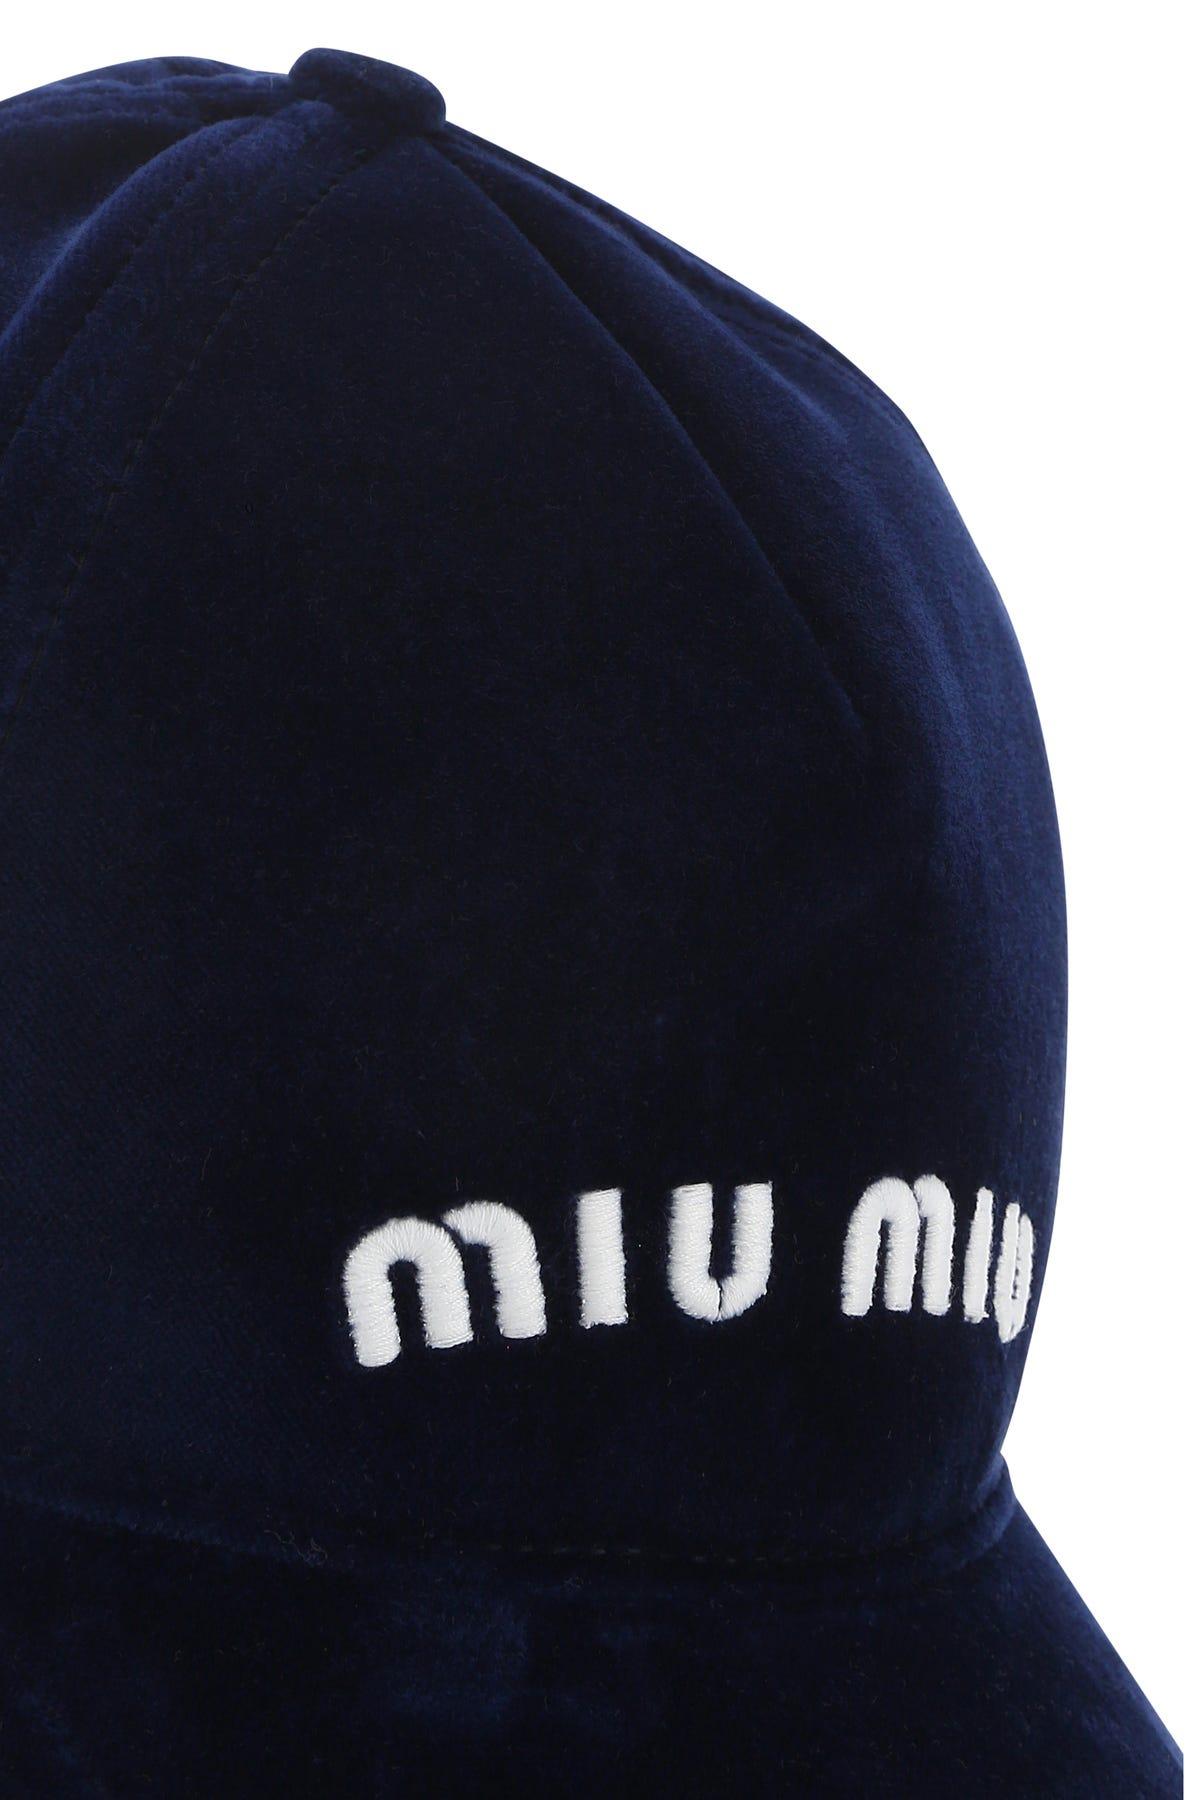 Miu Miu embroidered-logo Velvet Baseball Cap - Farfetch